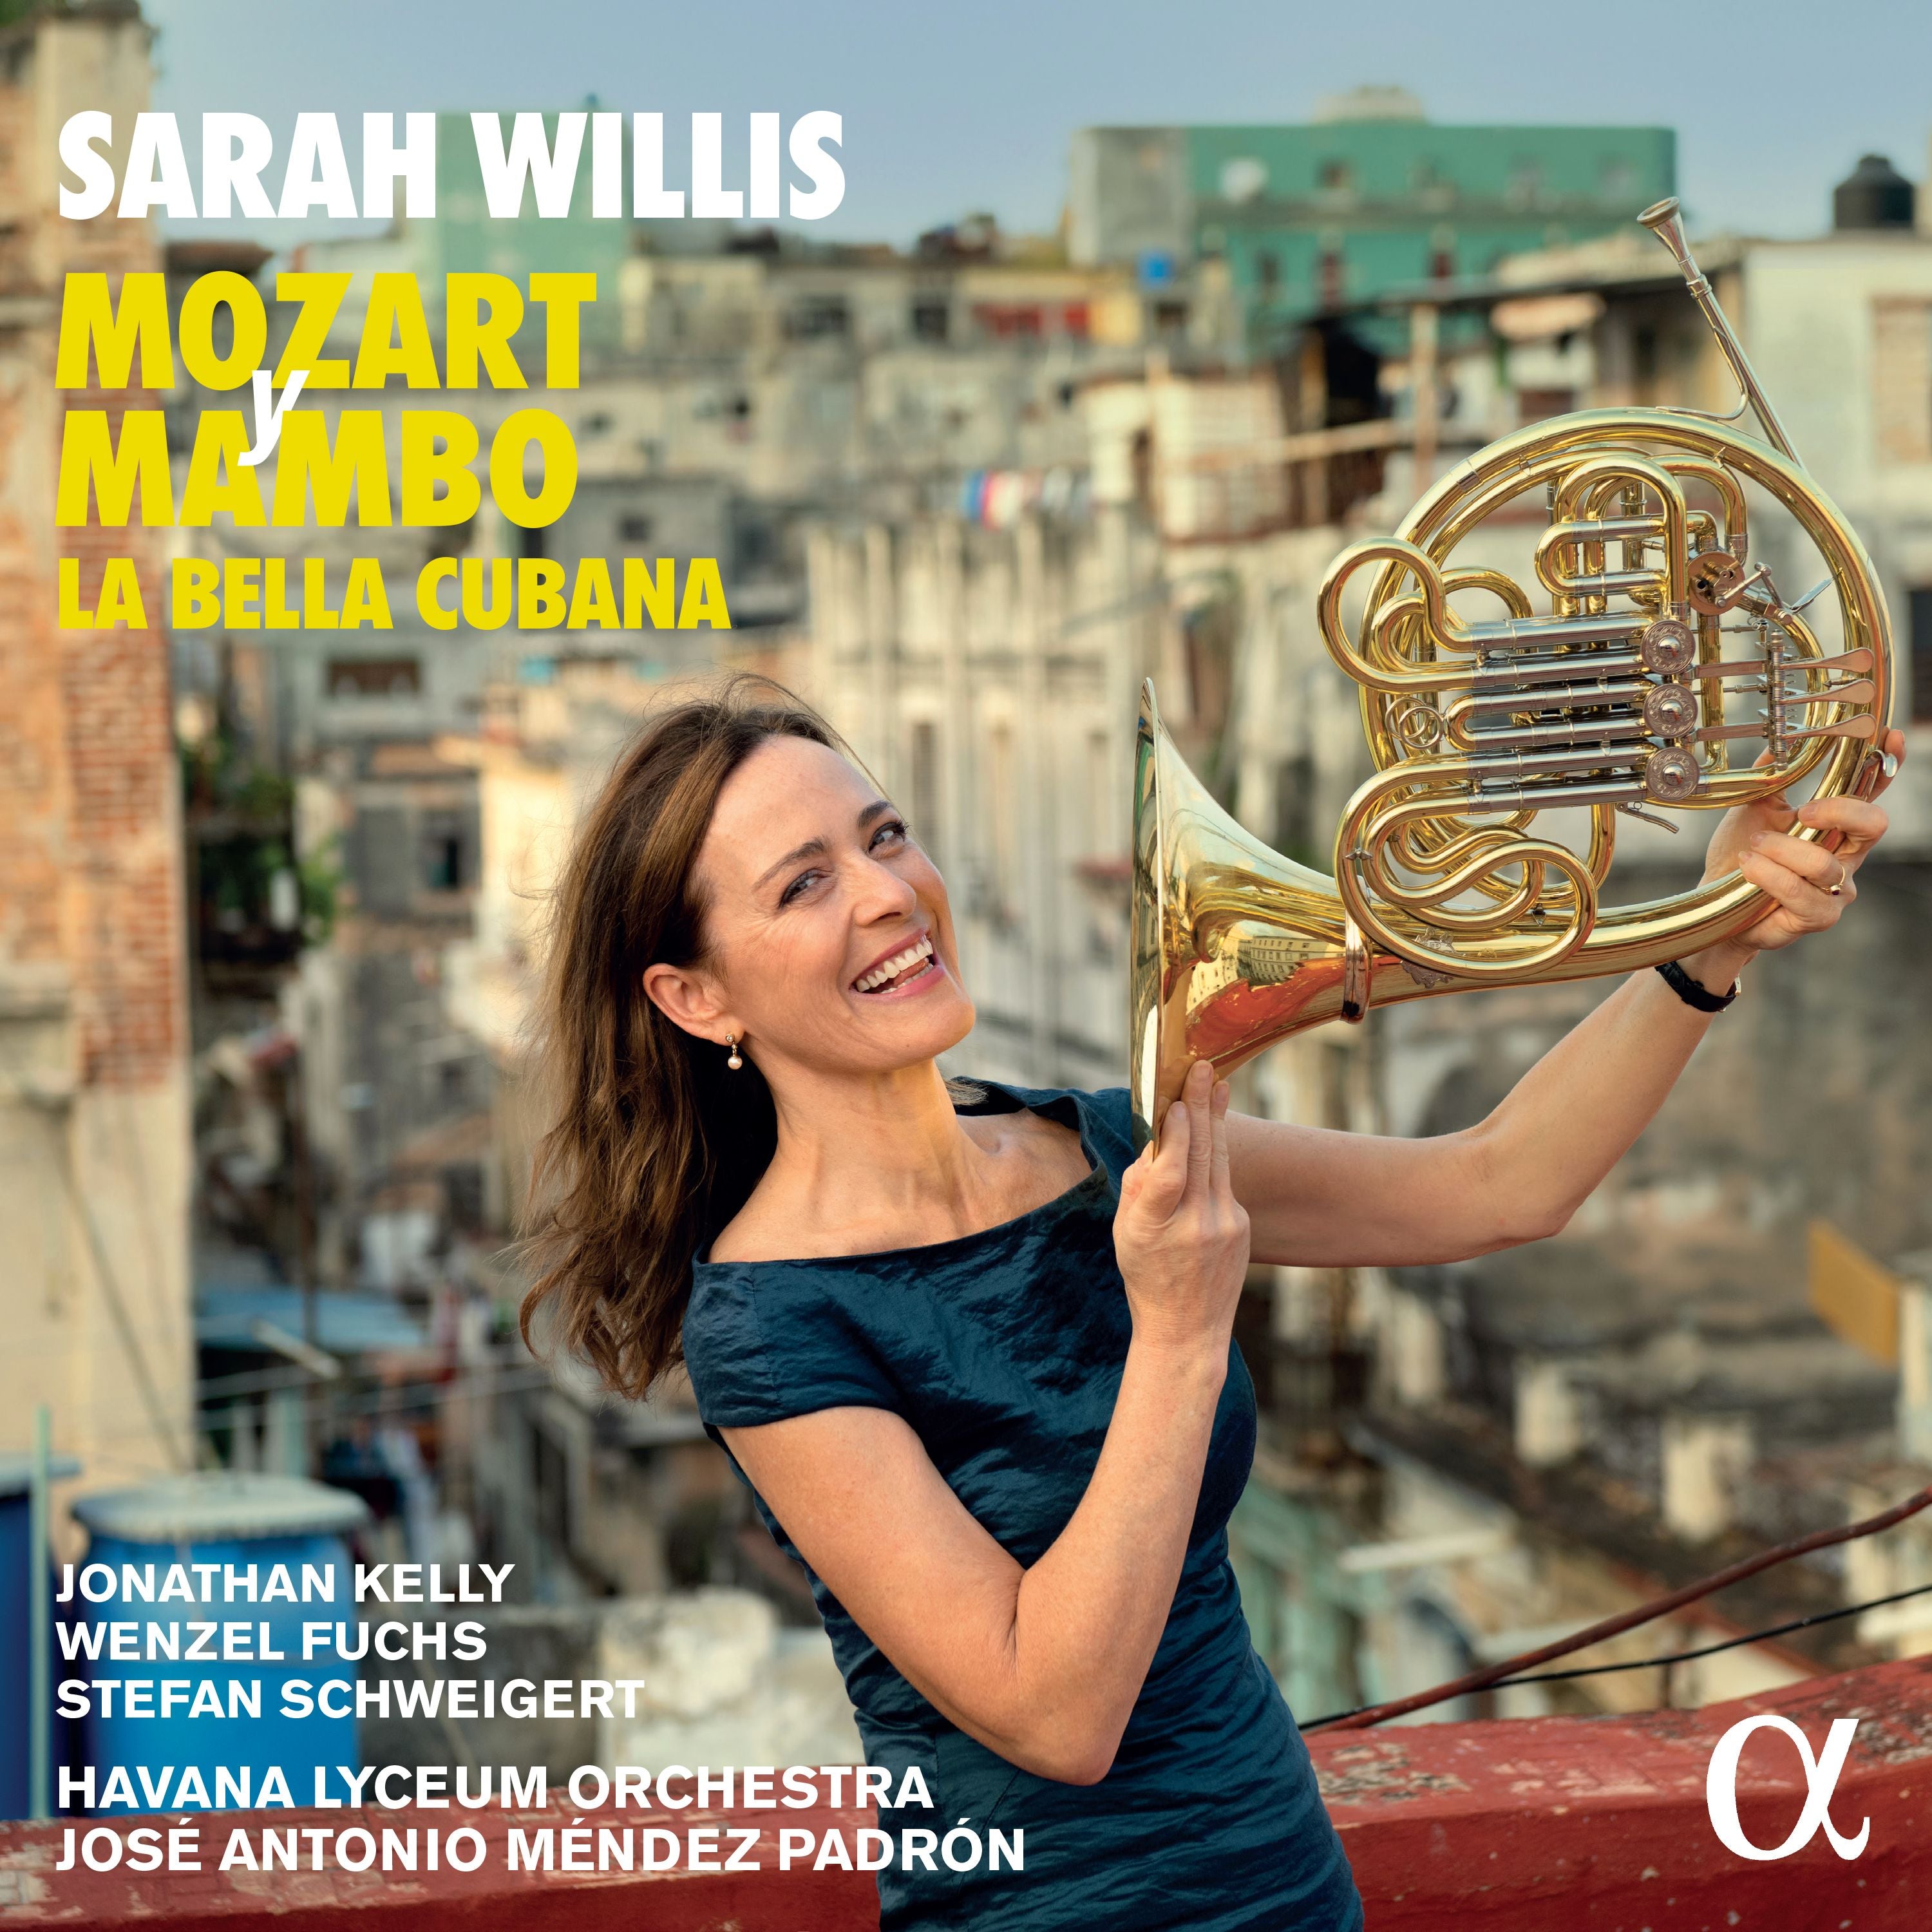 CD: Mozart y Mambo: La Bella Cubana by Sarah Willis